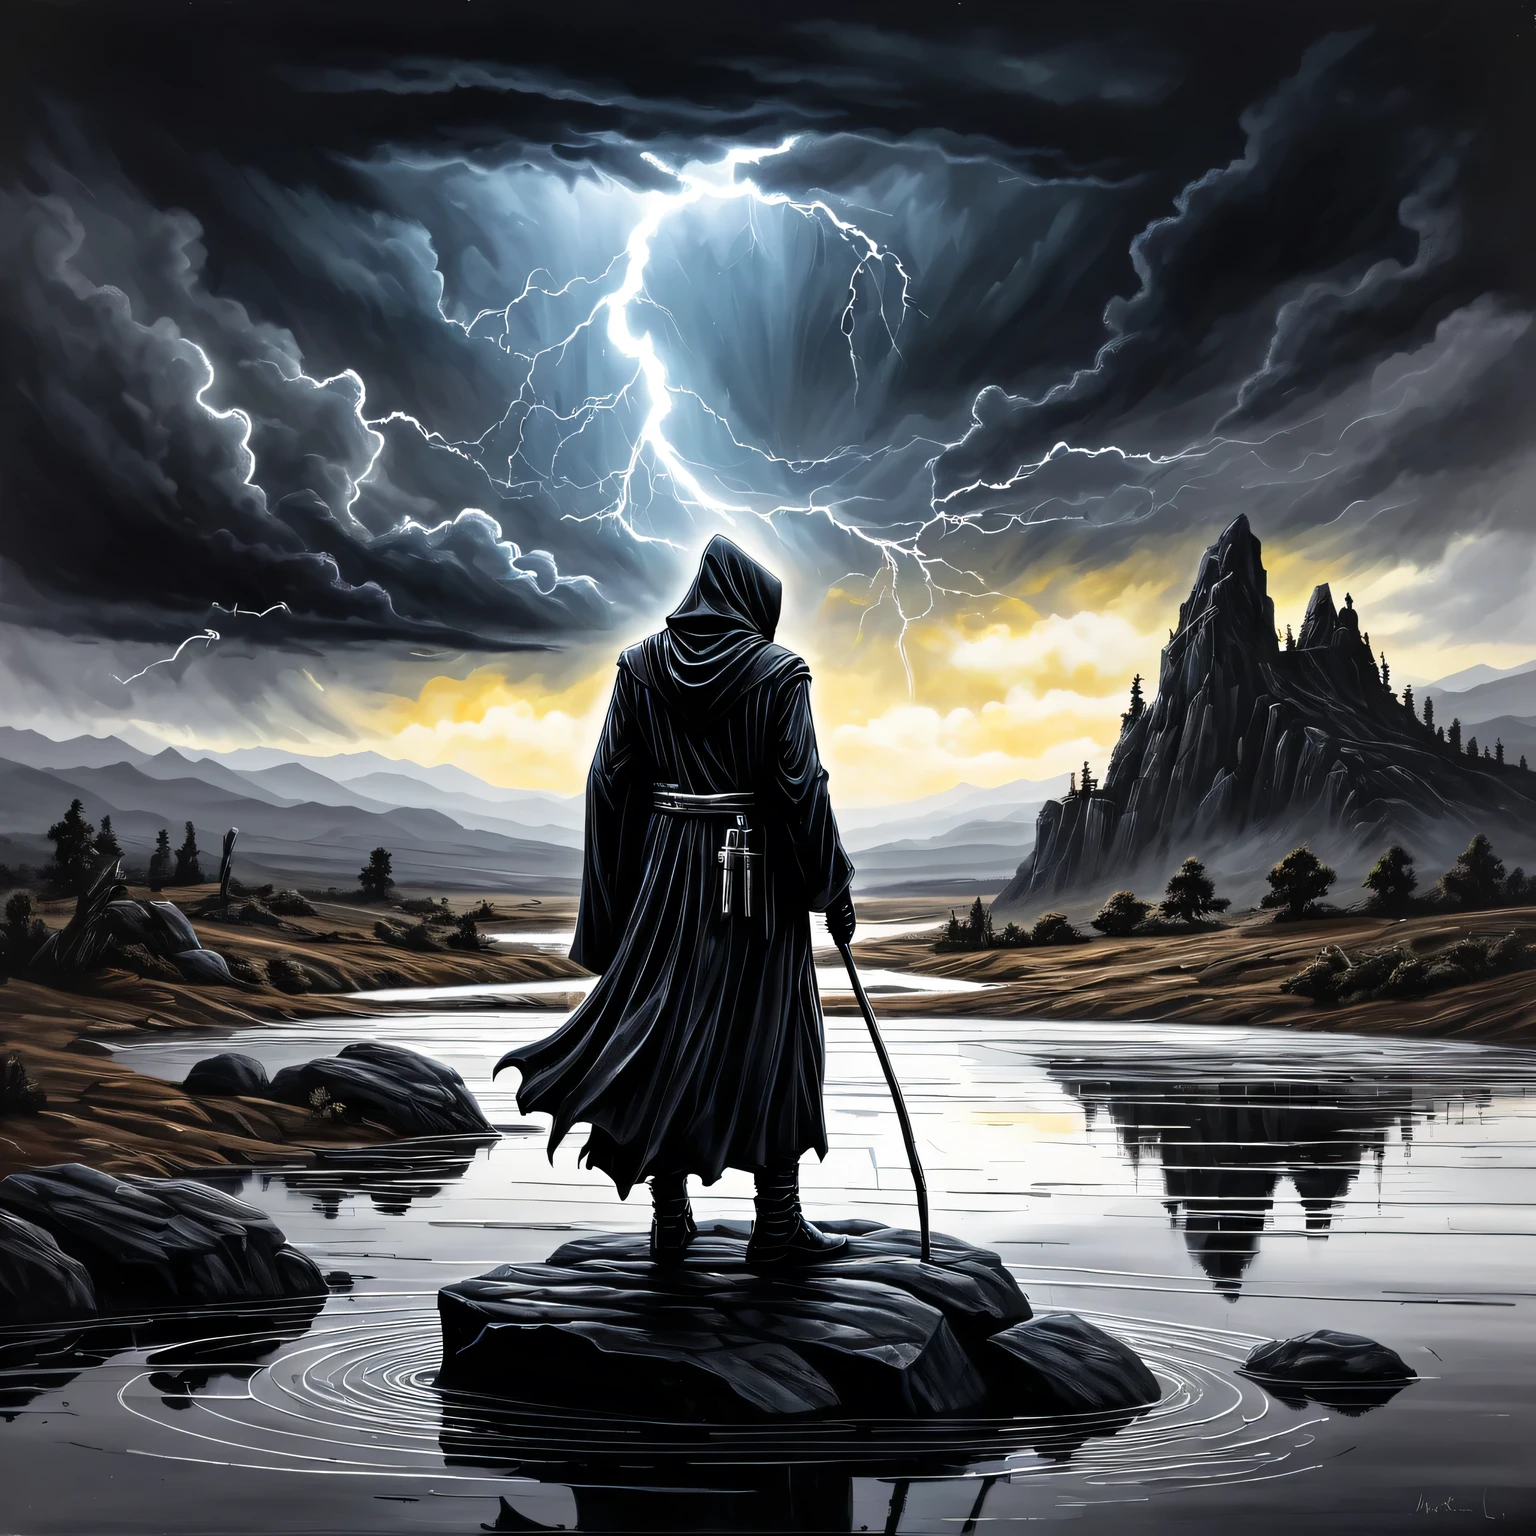 ((Liquid 金屬 Art)), 這幅畫是在紋理紙上用液態金屬繪製的，描繪了一幅美麗的簡約風景，黑色死神站在岩石上, Liquid 金屬 Black Grim Reaper looks ominous and gloomy, 背景是陰沉的天空，有雲和閃電, 這幅畫是由液態金屬製成的. 金屬, 杰作, 輪廓清晰, 32克拉